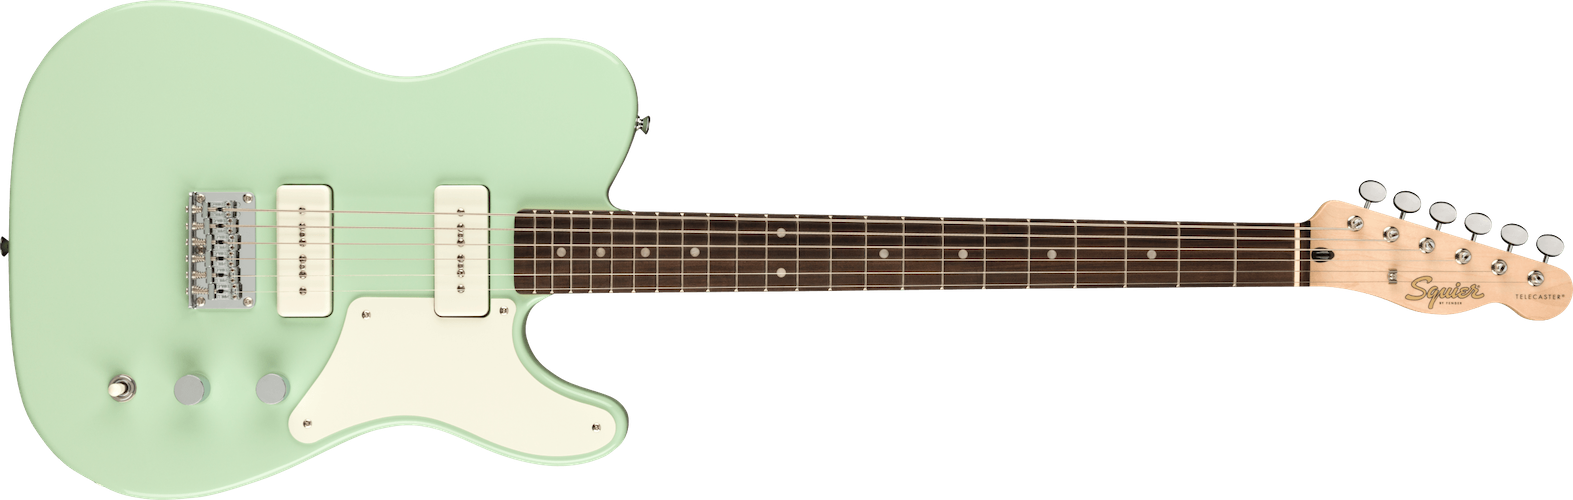 Fender Squier Paranormal Baritone Cabronita Telecaster, Surf Green